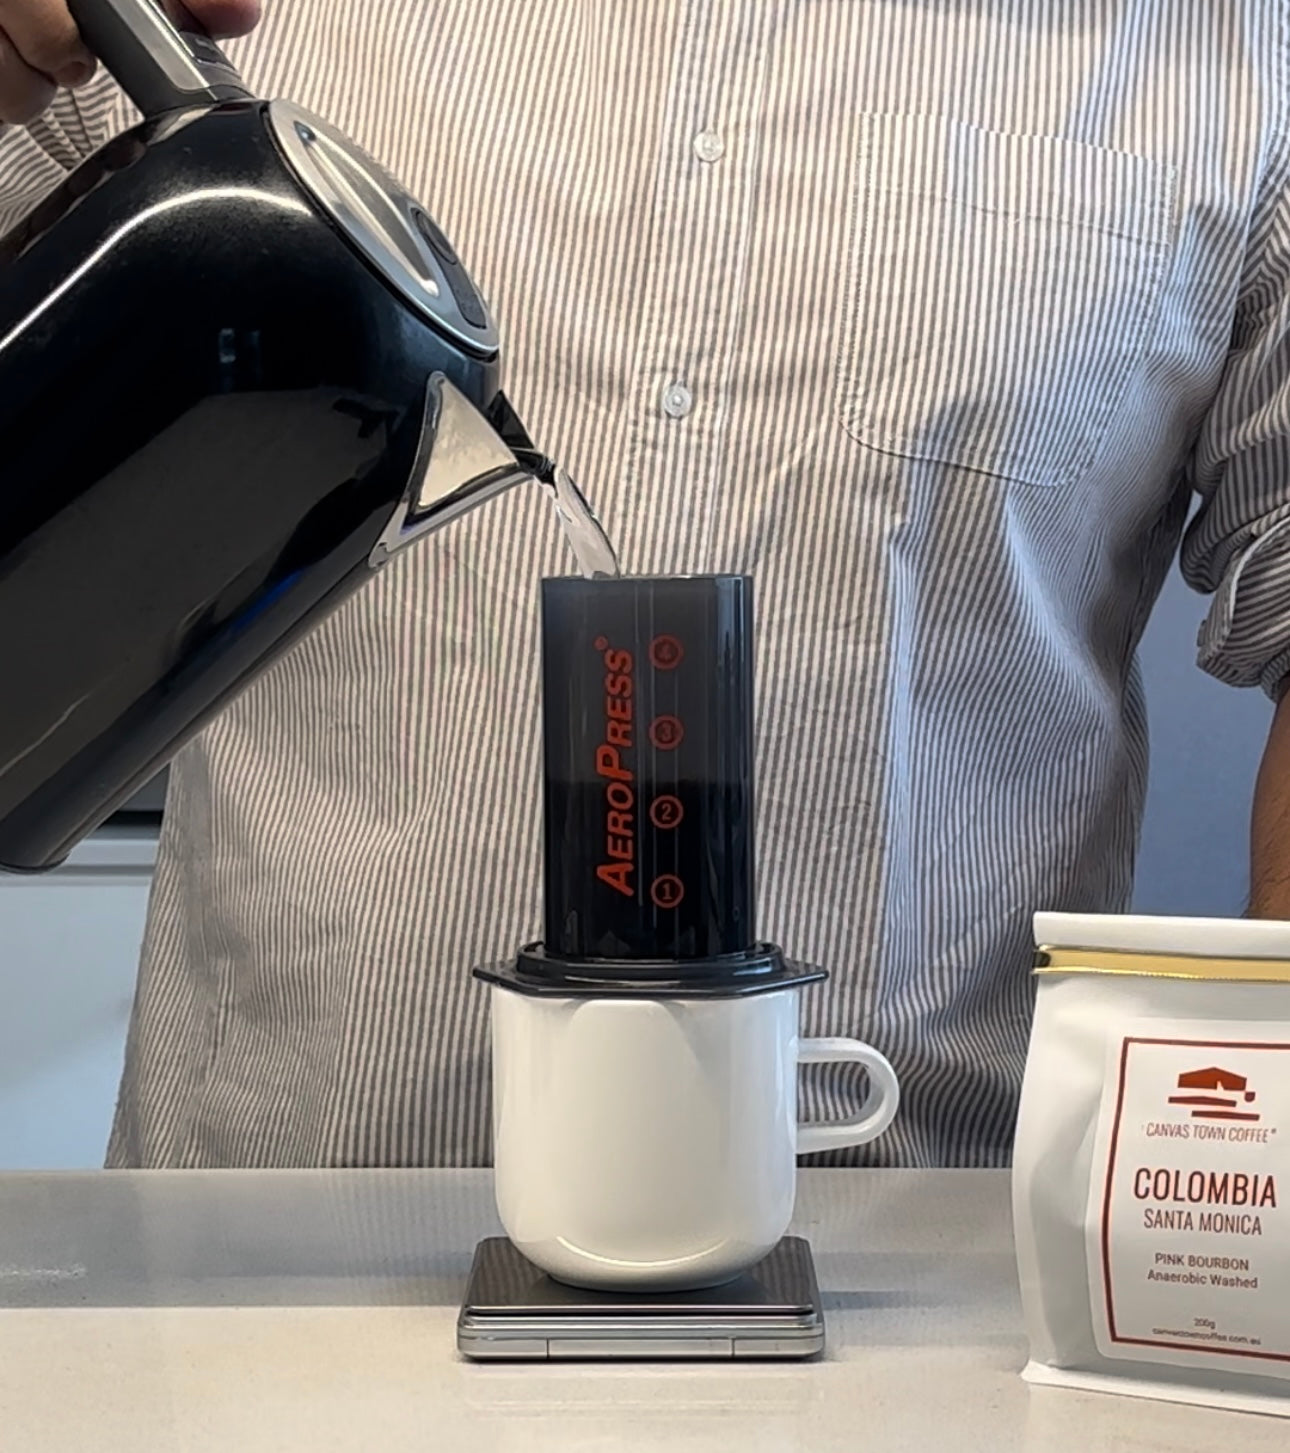 Making coffee with an AeroPress